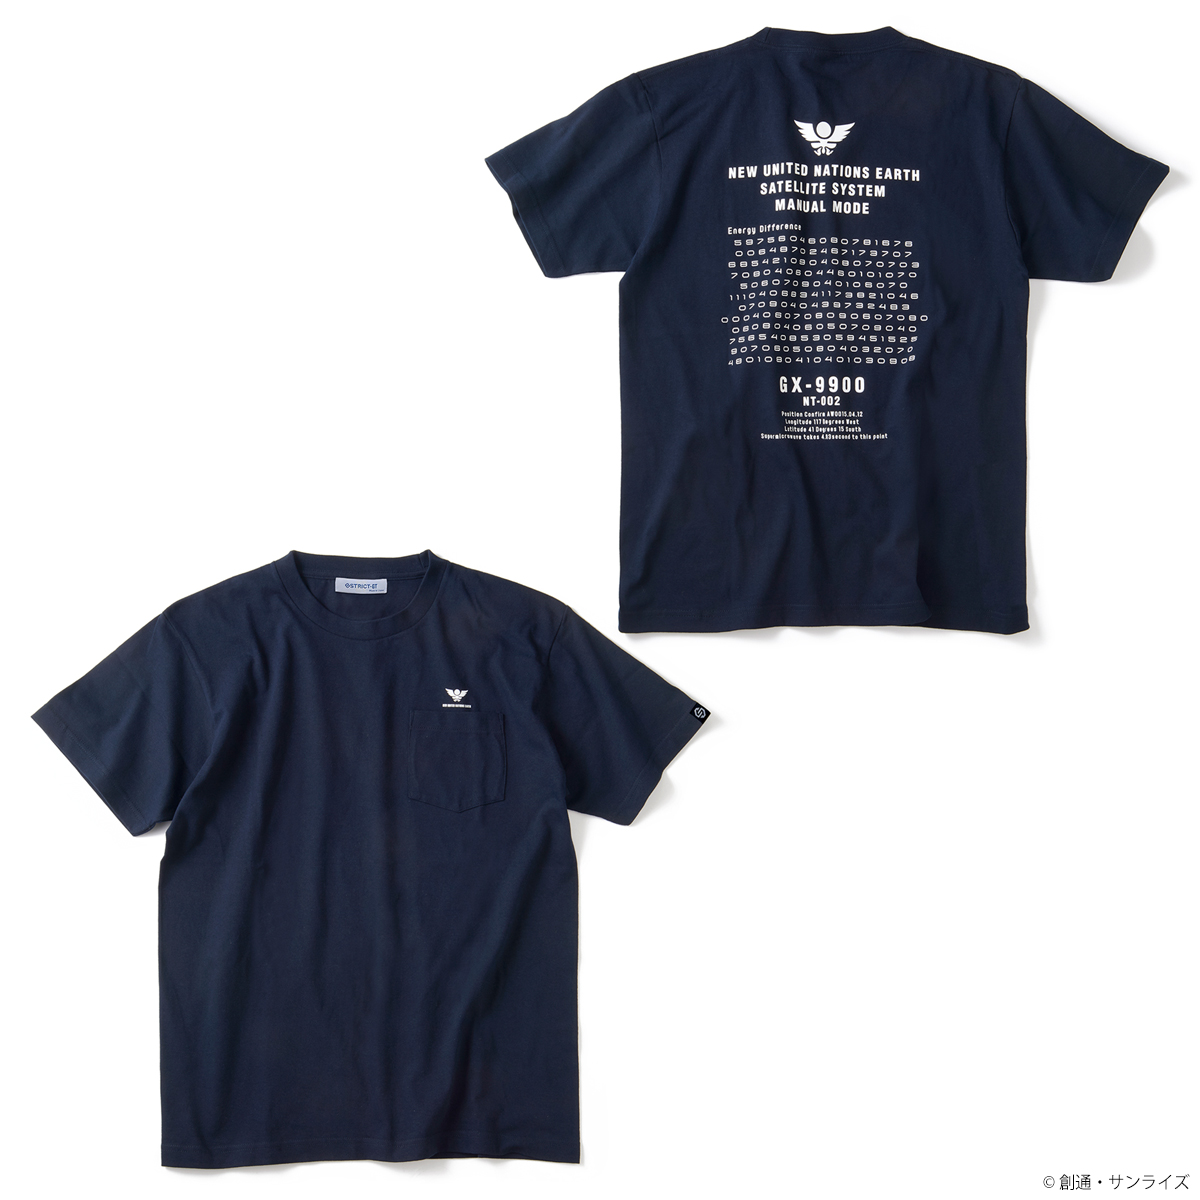 STRICT-G『機動新世紀ガンダムX』 ポケットTシャツ サテライトシステム